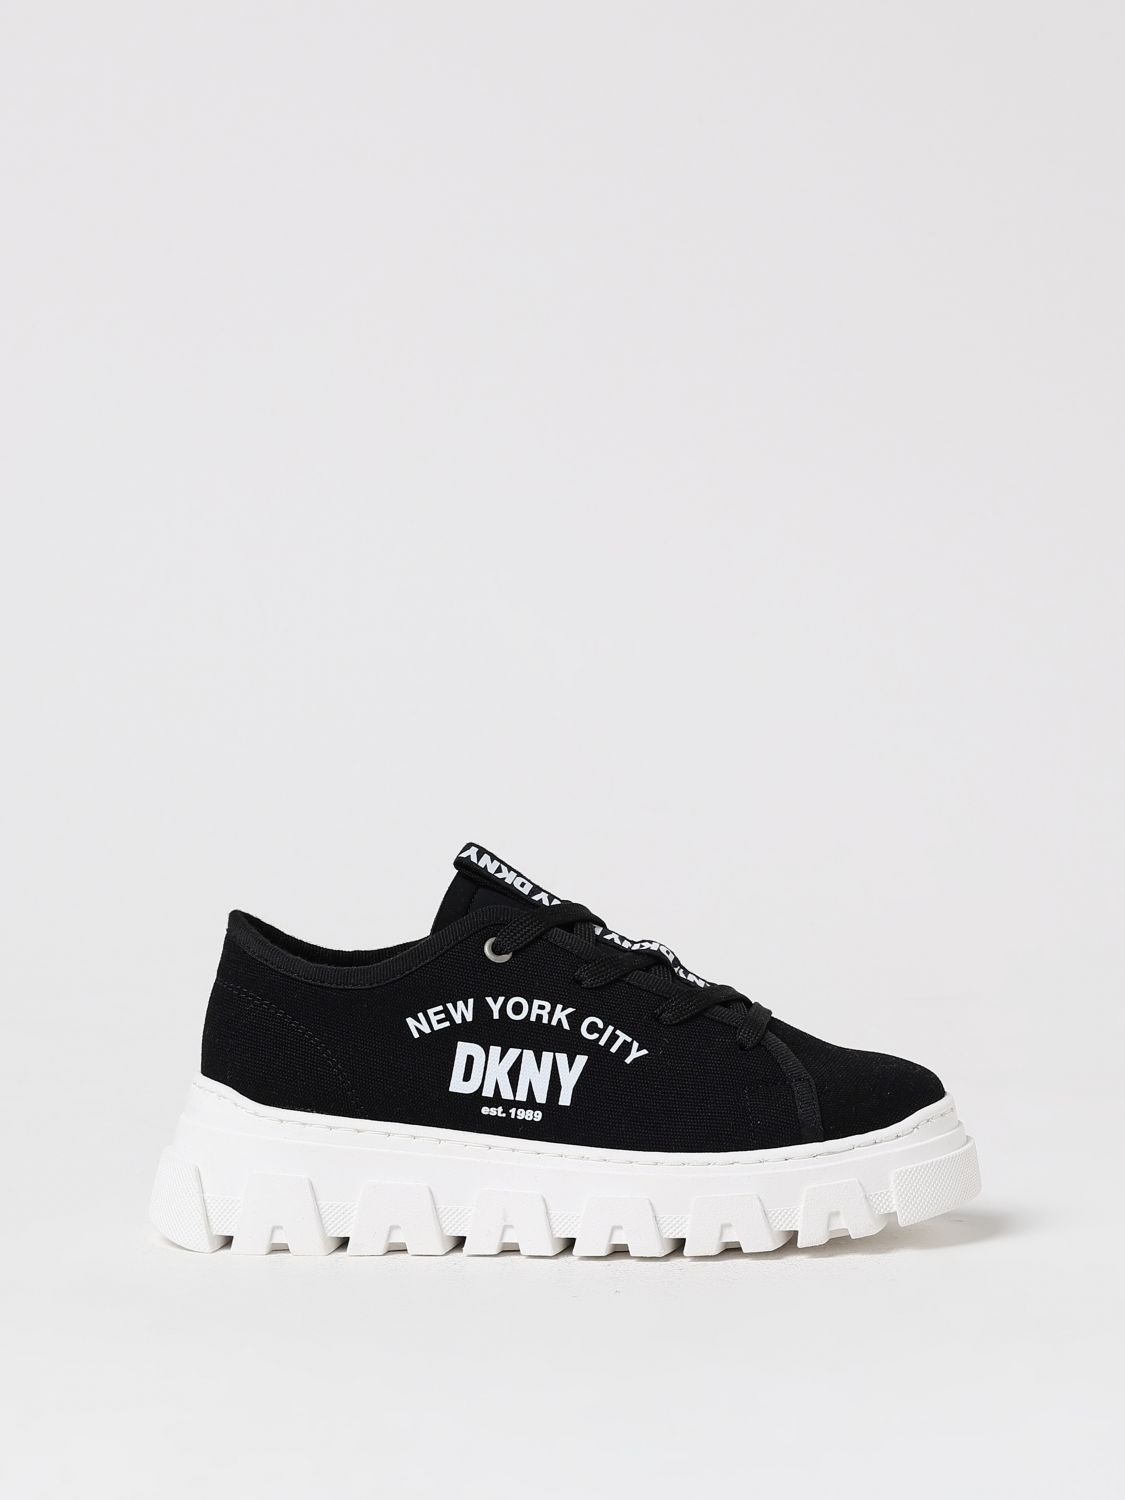 DKNY Shoes DKNY Kids color Black